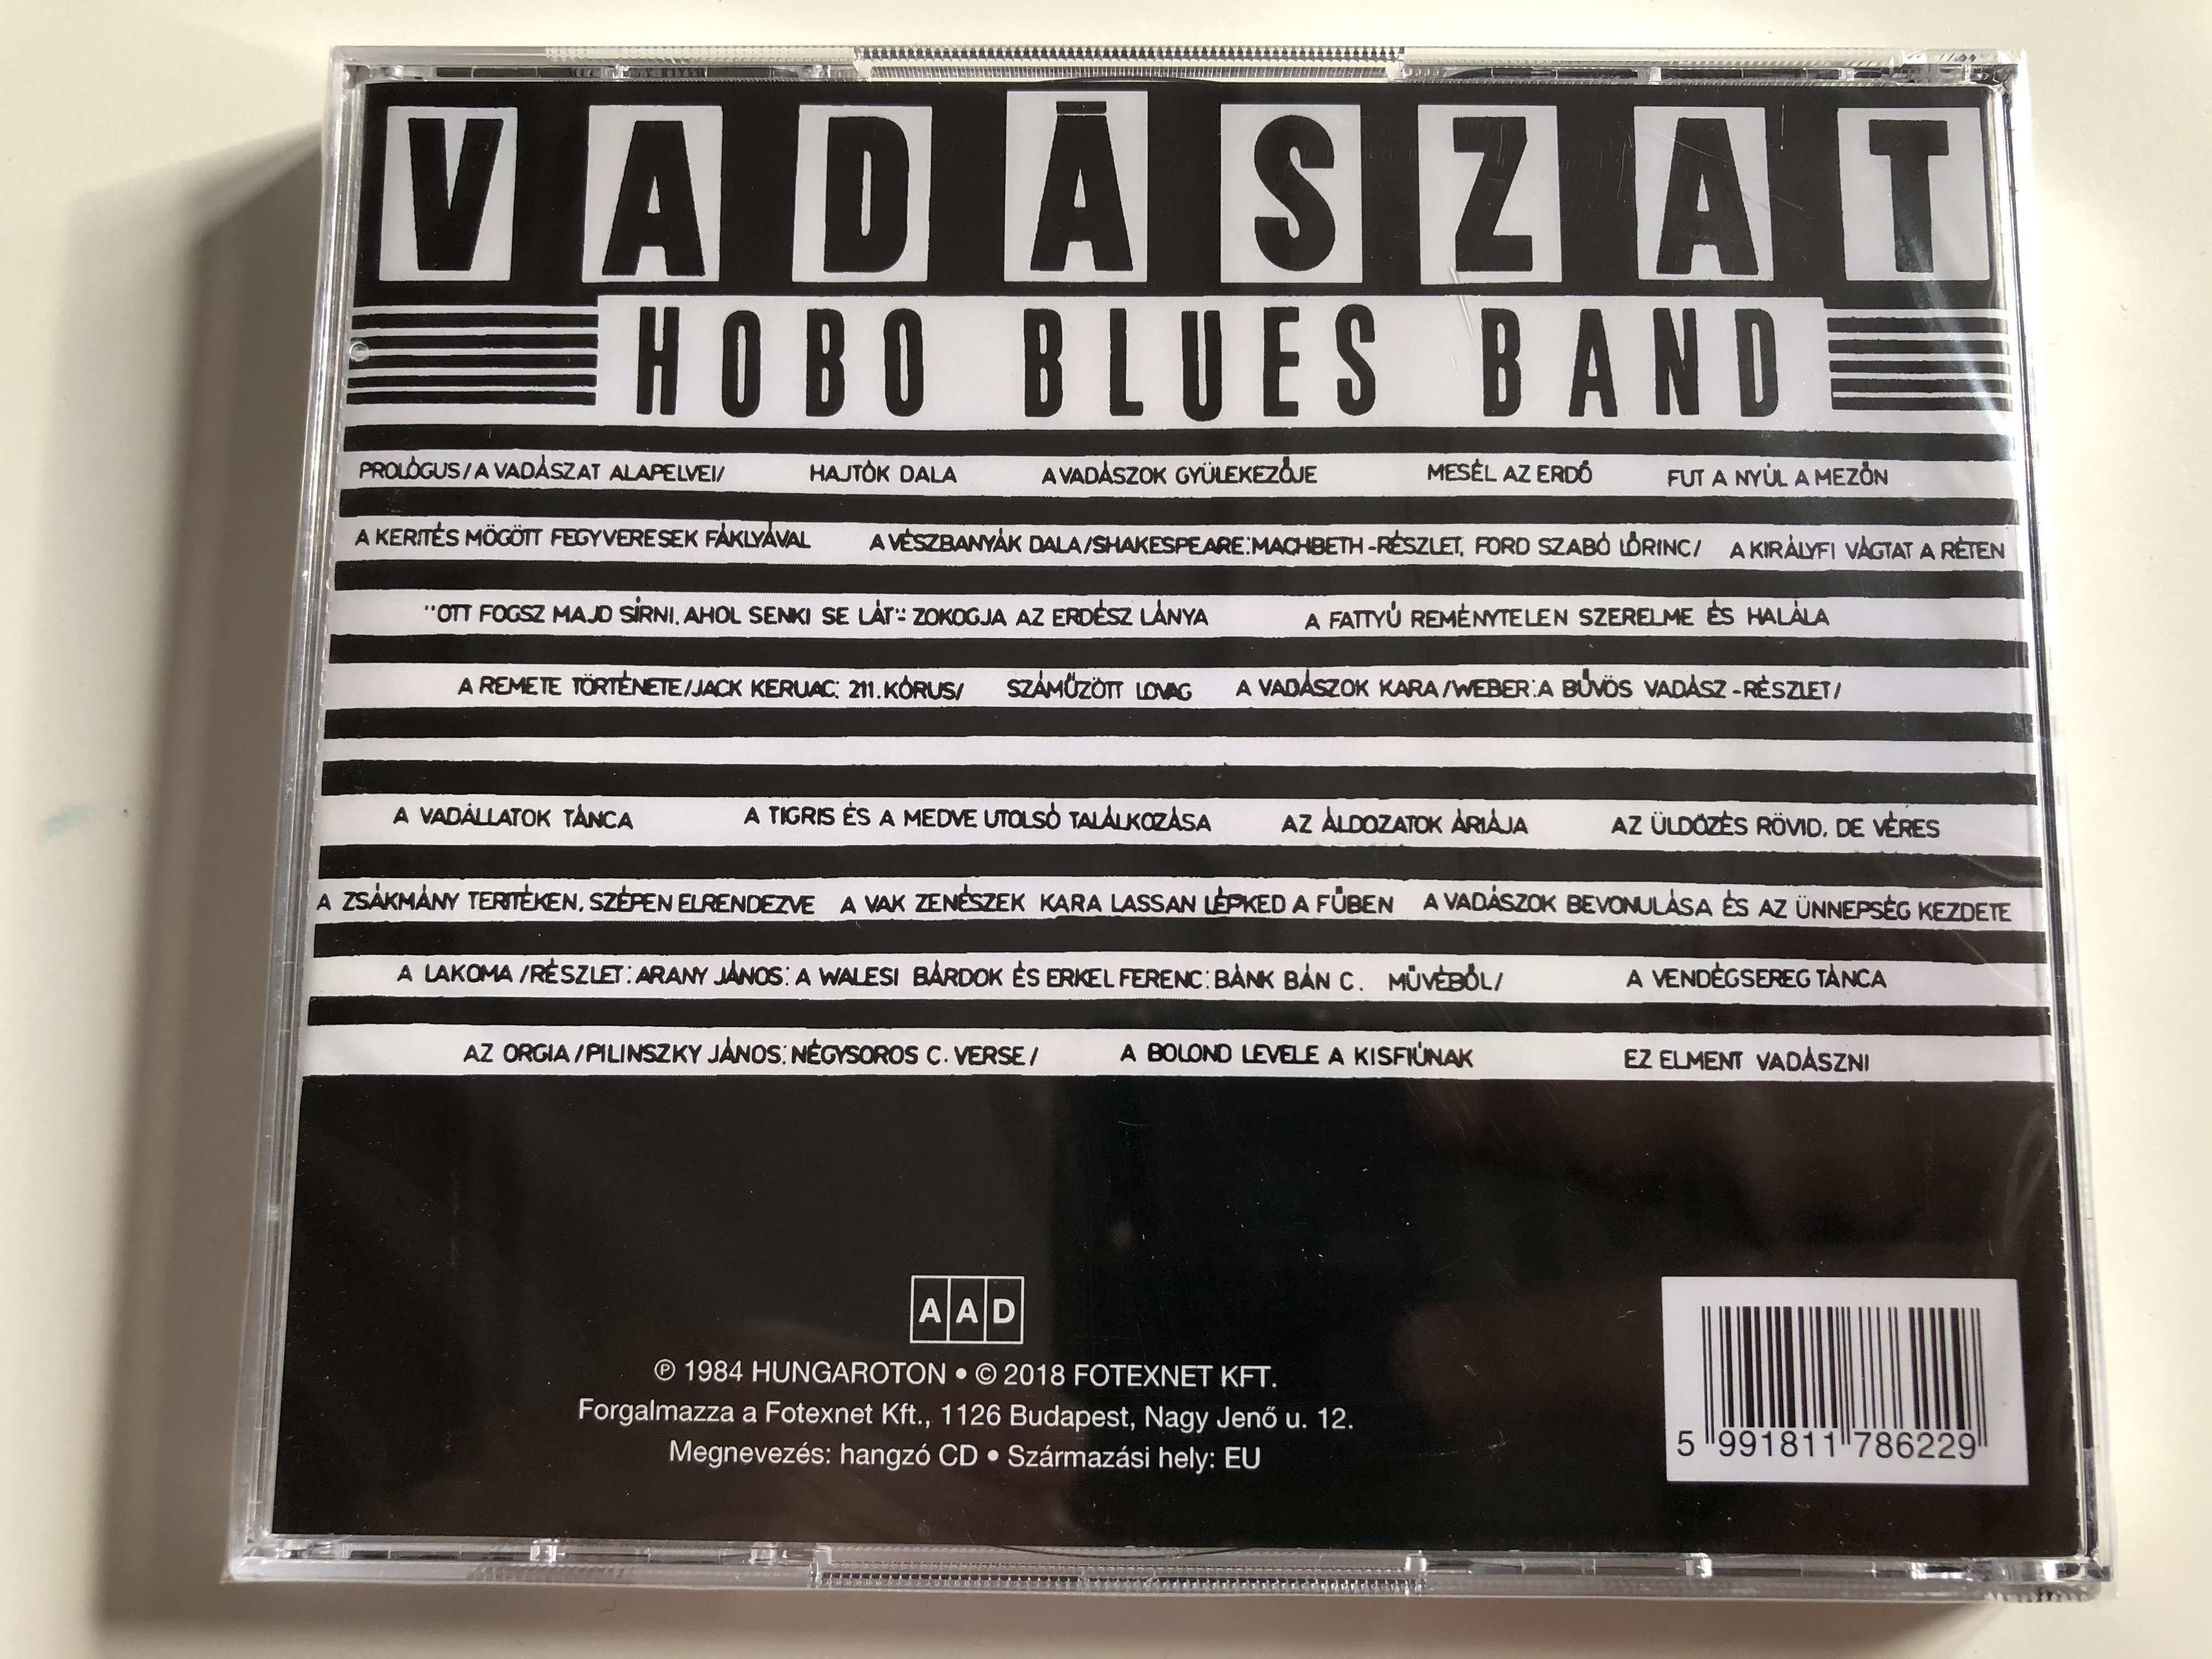 vad-szat-hobo-blues-band-mega-2x-audio-cd-hcd-17862-63-92m-050-051-2-.jpg